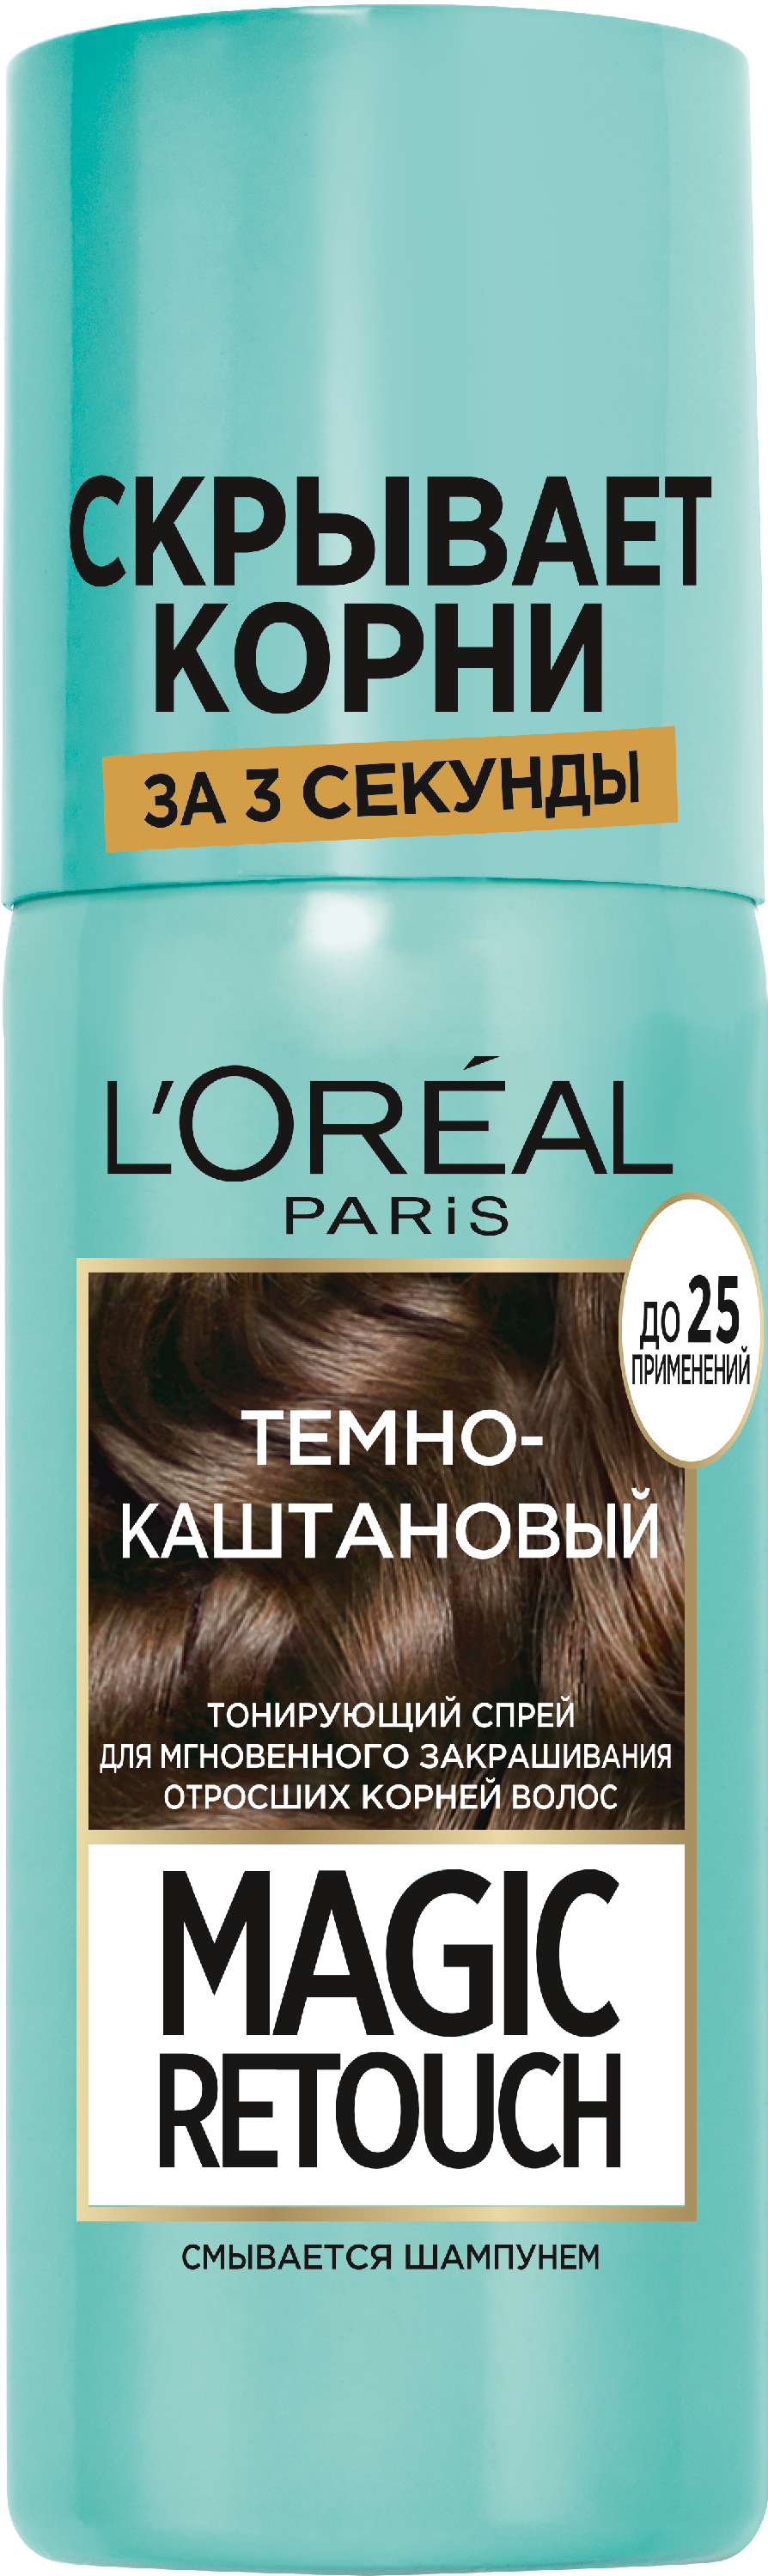 L'Oreal Тонирующий спрей для волос Paris Magic Retouch #2 75мл темно-каштановый 